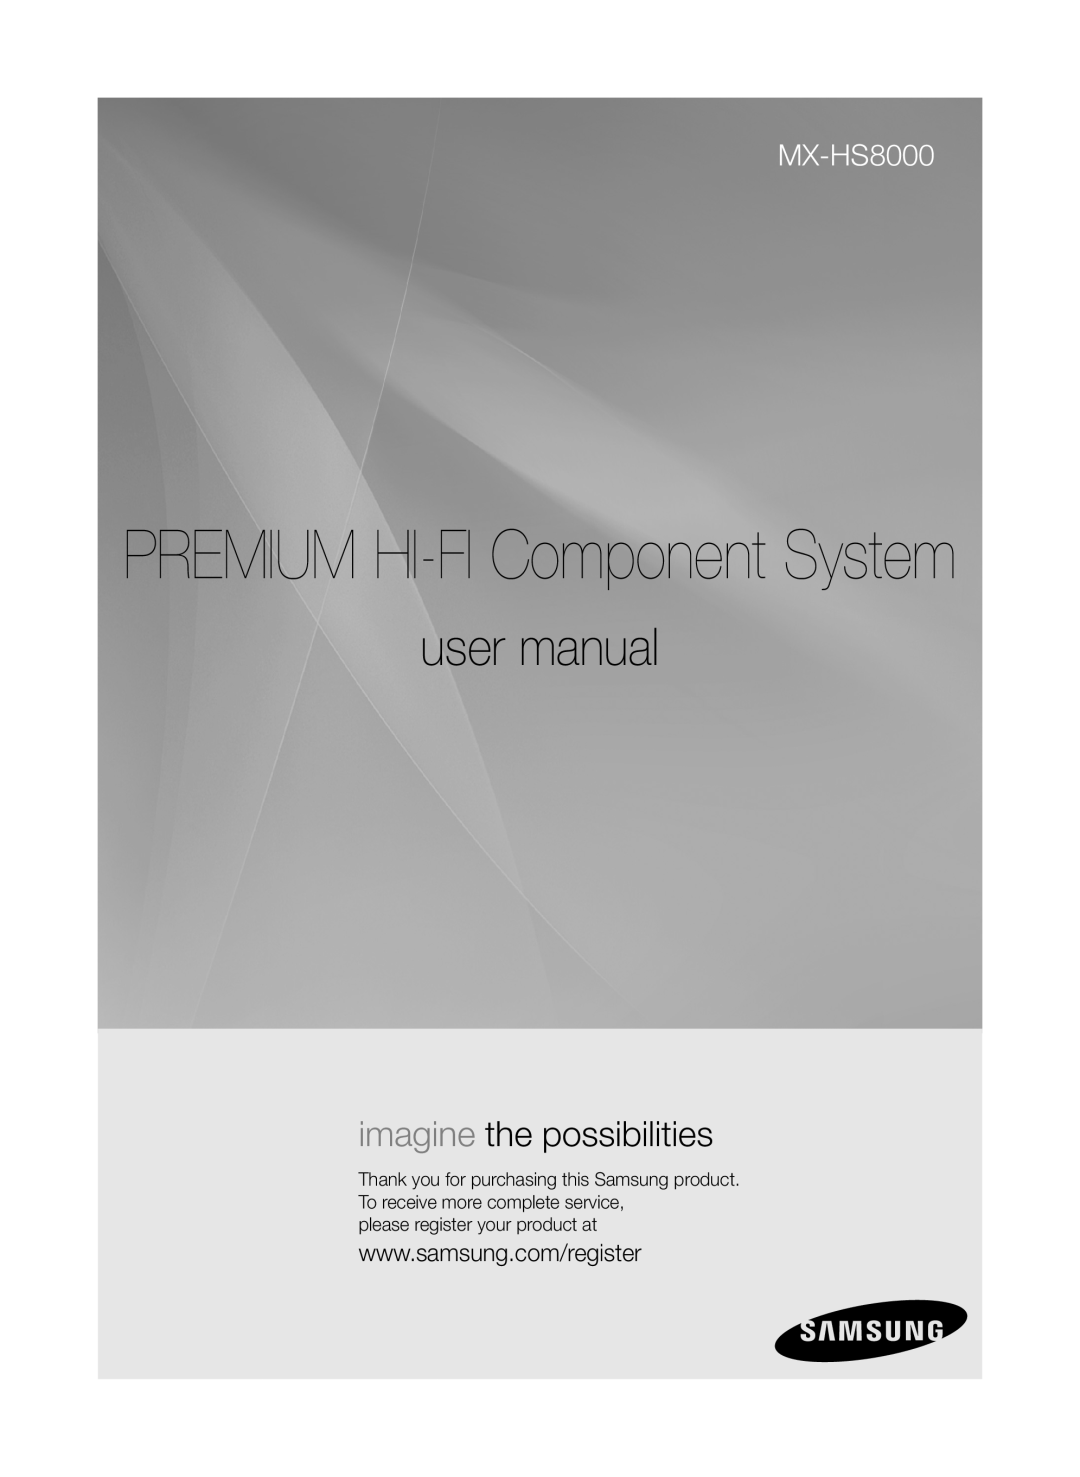 Samsung MX-HS8000/ZF, MX-HS8000/EN manual PREMIUM HI-FI Component System, user manual, imagine the possibilities 